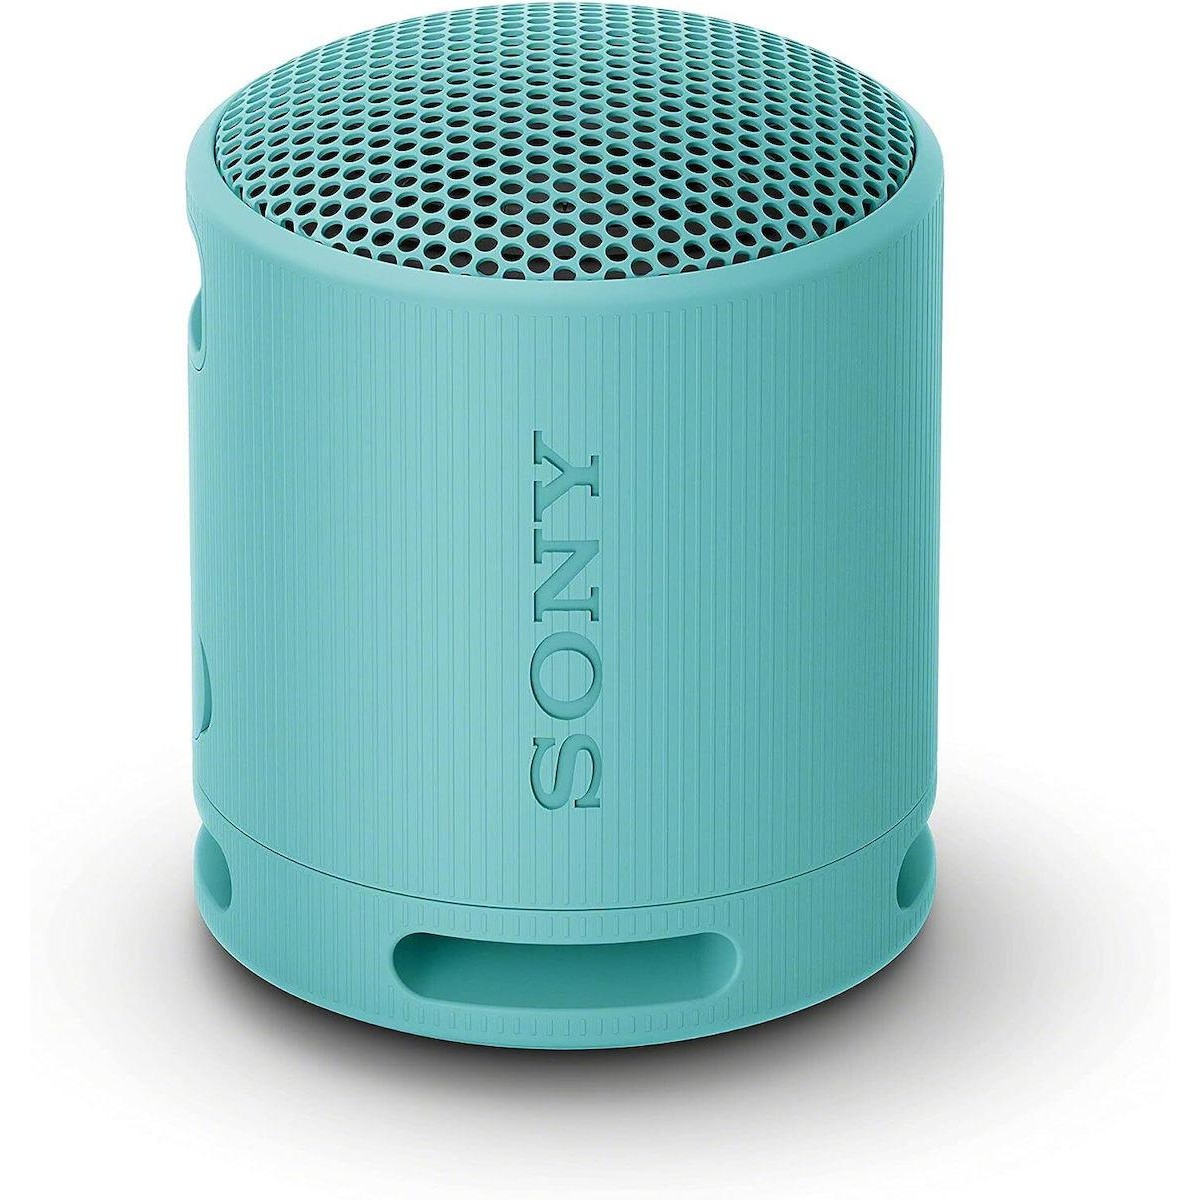 Sony SRS-XB100L bluetooth speaker blue